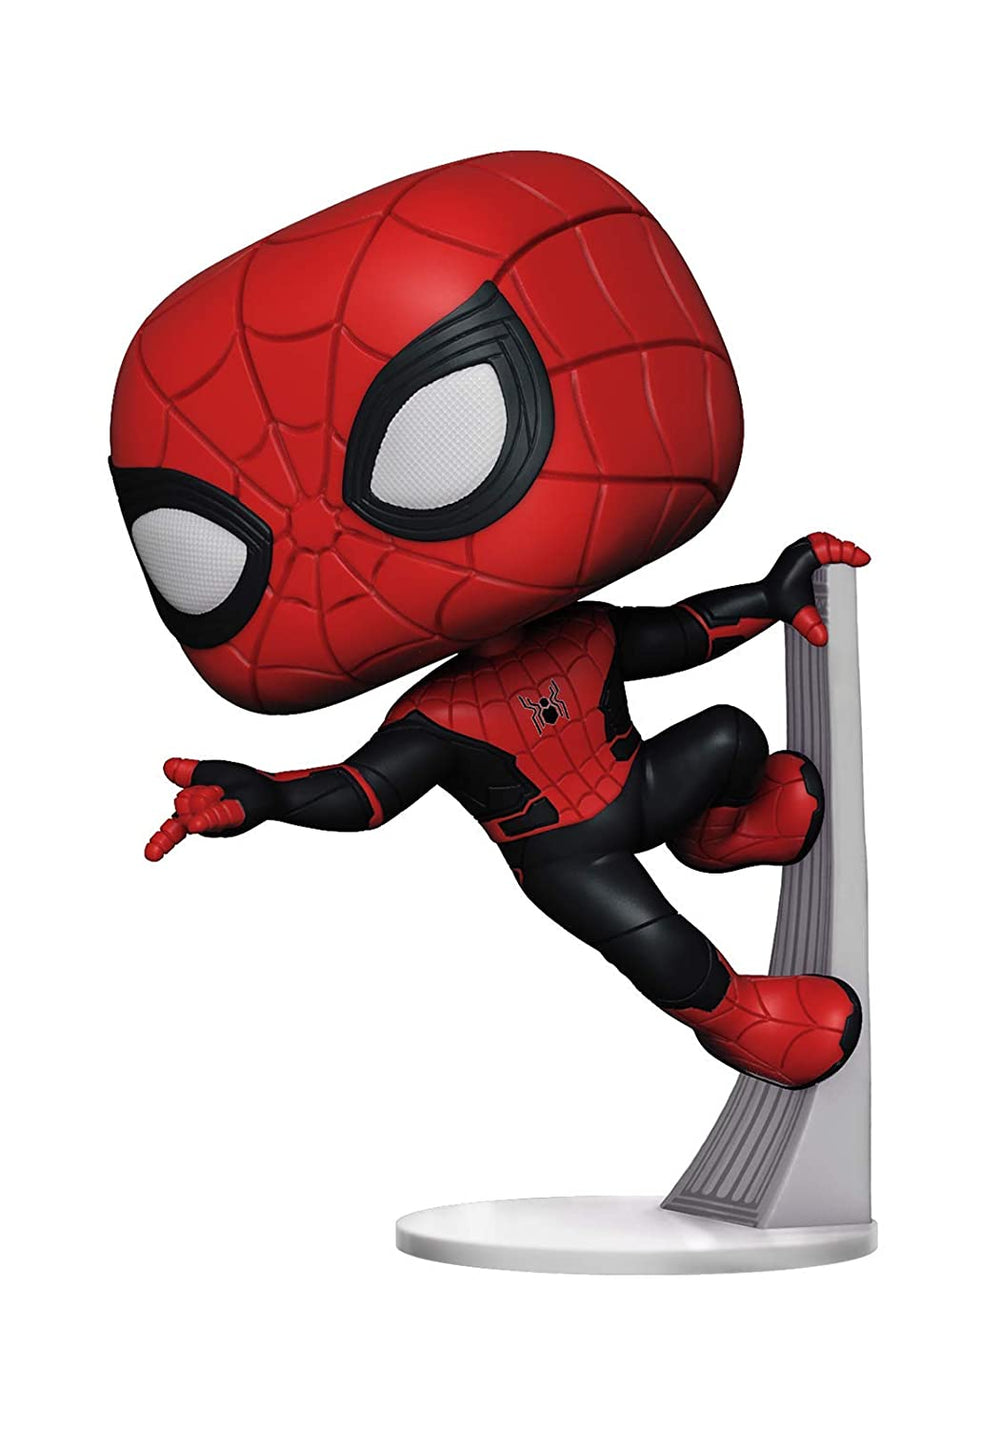 Funko Pop Marvel Spider-Man Far from Home - Spider-Man Upgraded Suit Vinyl Figure